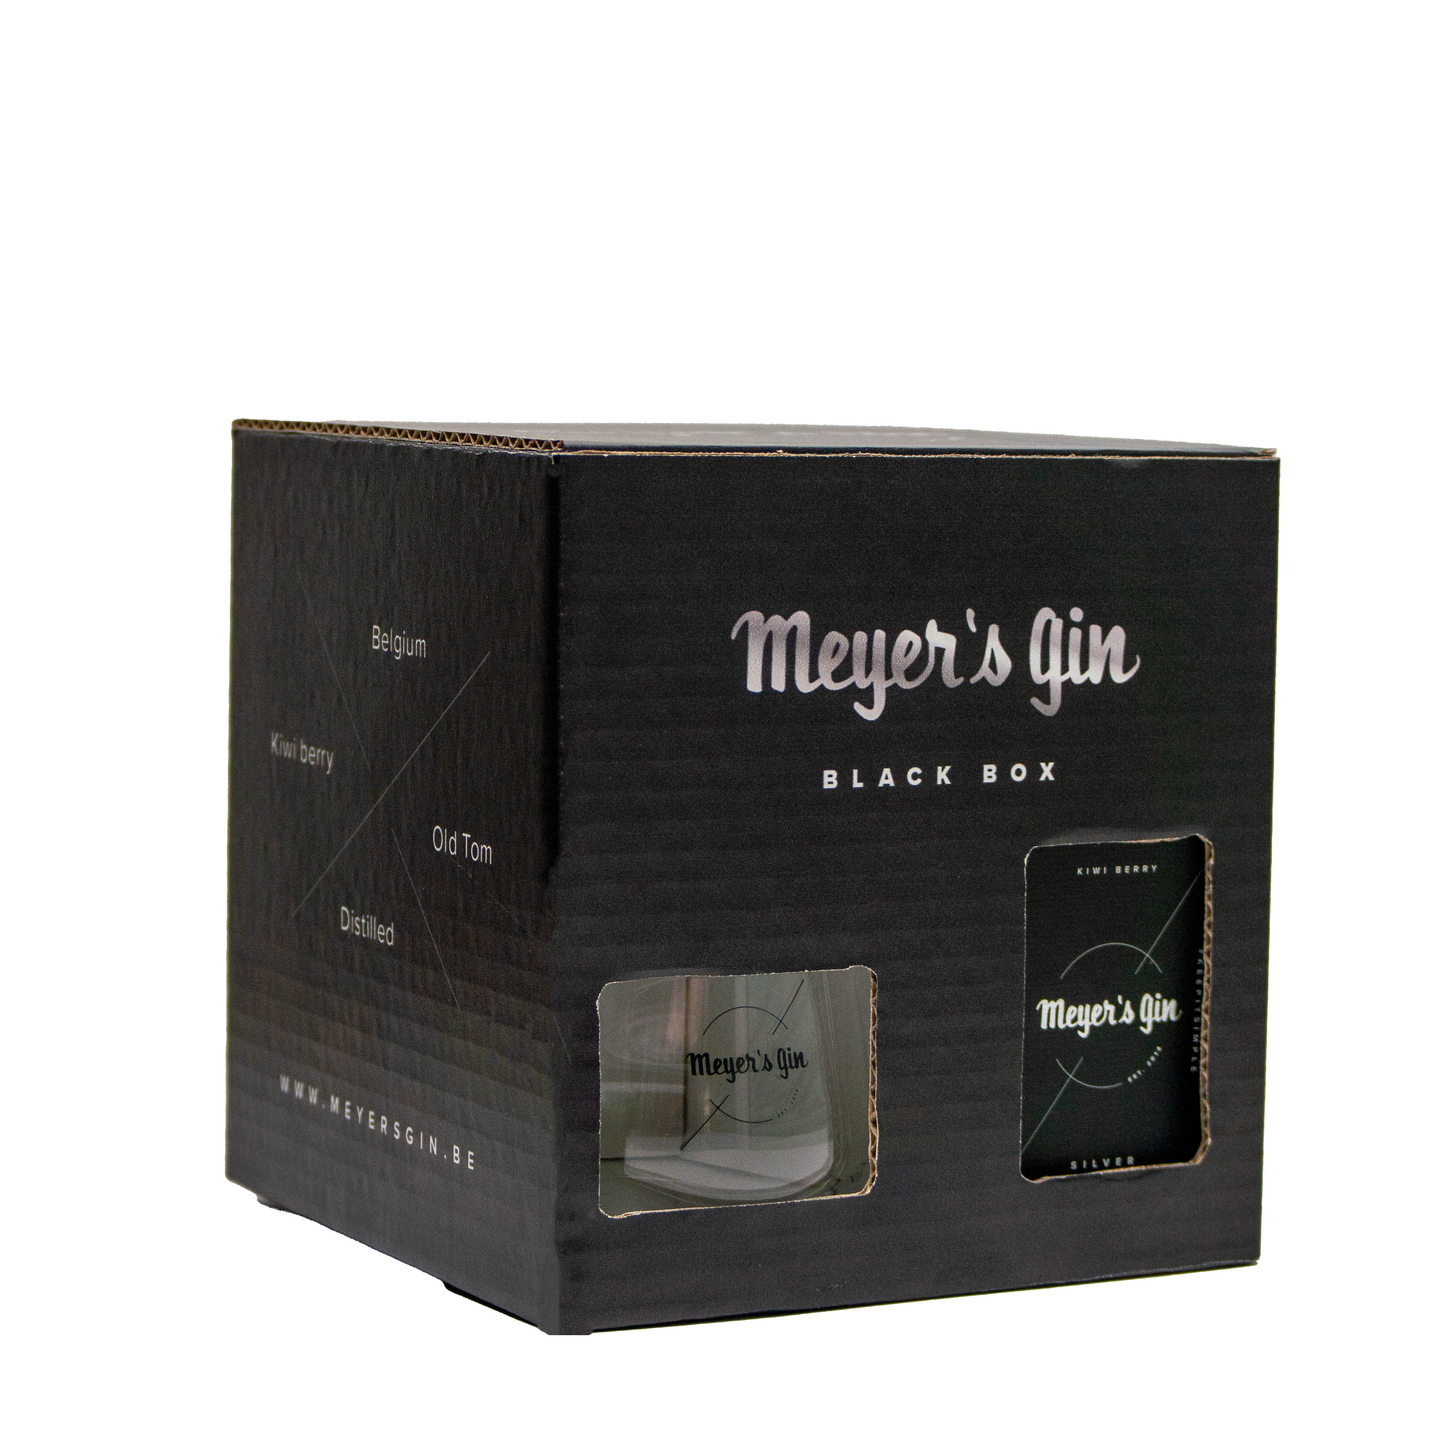 Meyer's Gin Black box - Duobox